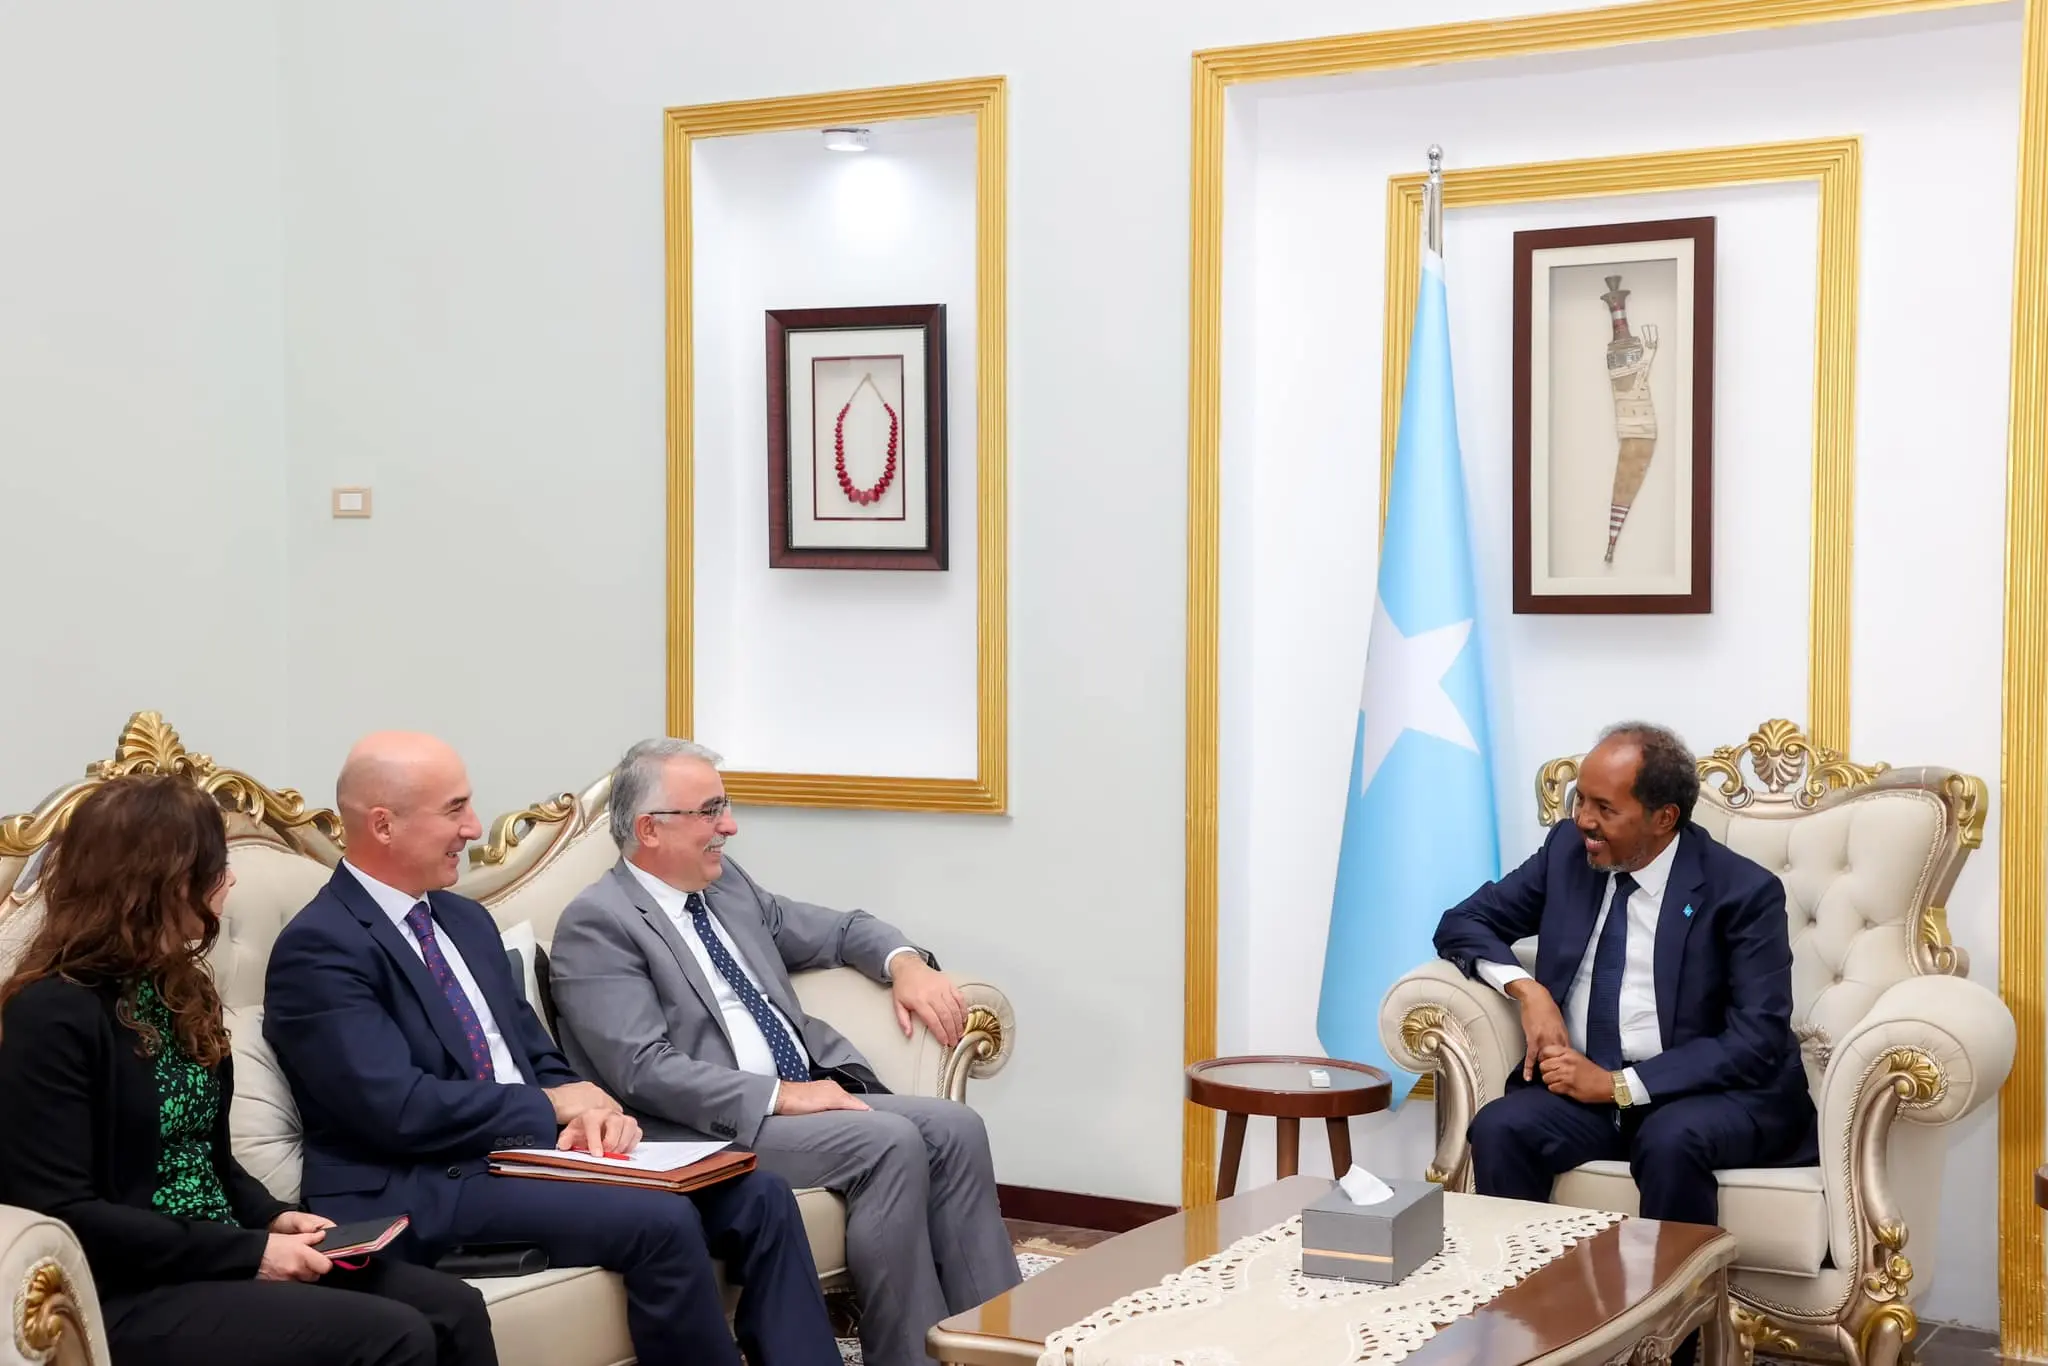 Somalia: President Hassan Sheikh announced the resumption of dialogue between Somalia and Somaliland